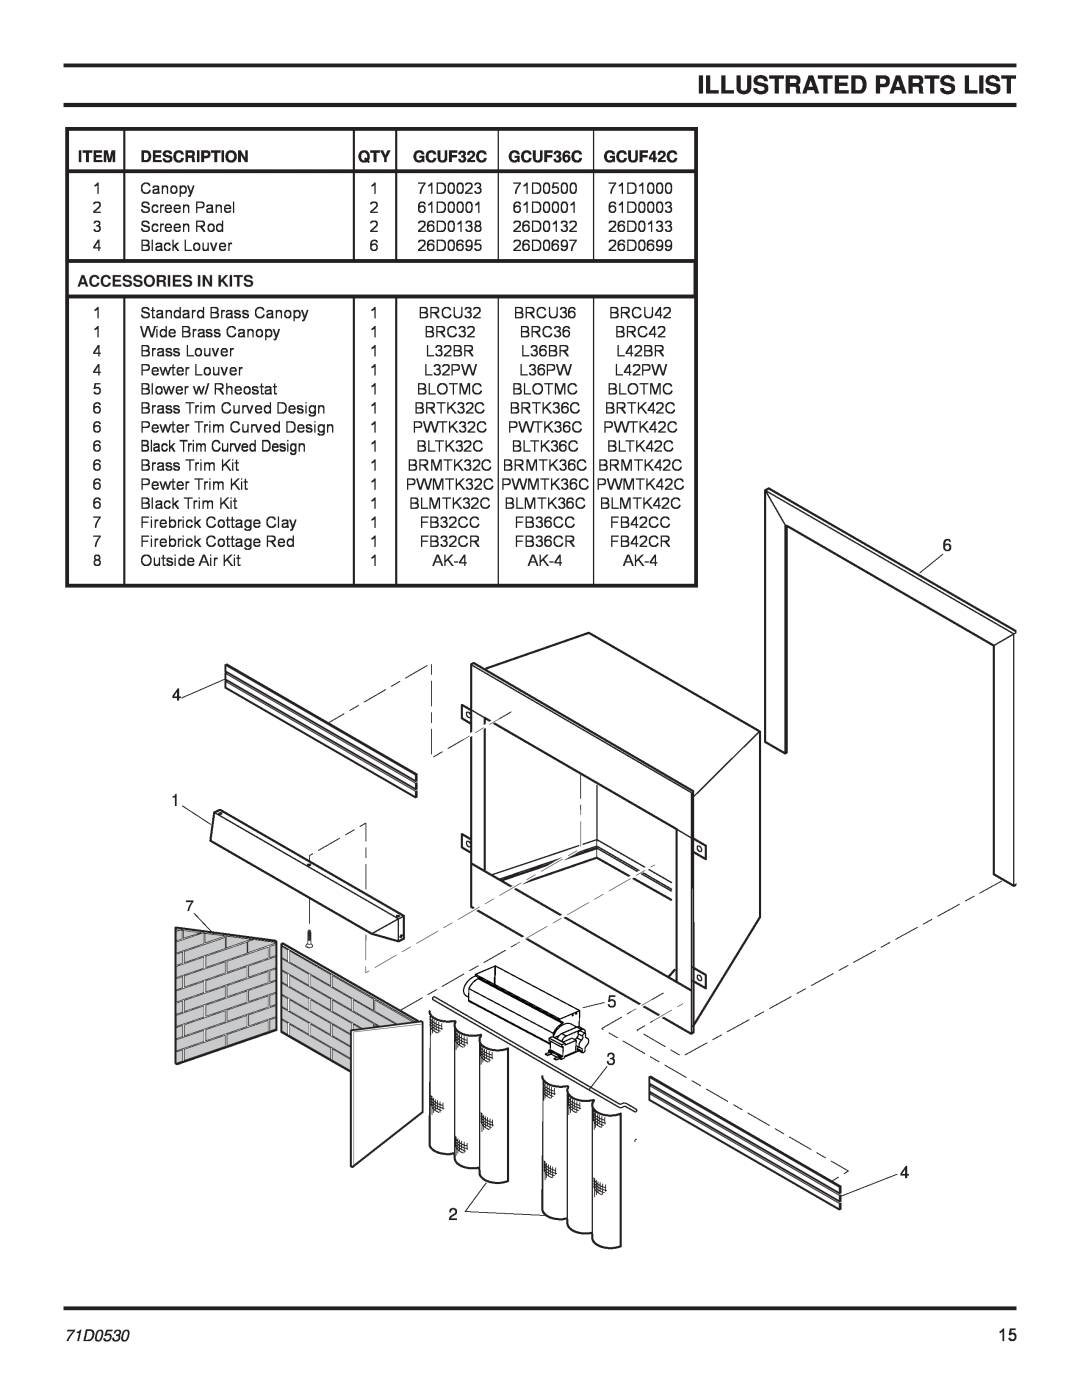 Monessen Hearth GCUF Series Illustrated Parts List, Description, GCUF32C, GCUF36C, GCUF42C, Accessories In Kits, 71D0530 